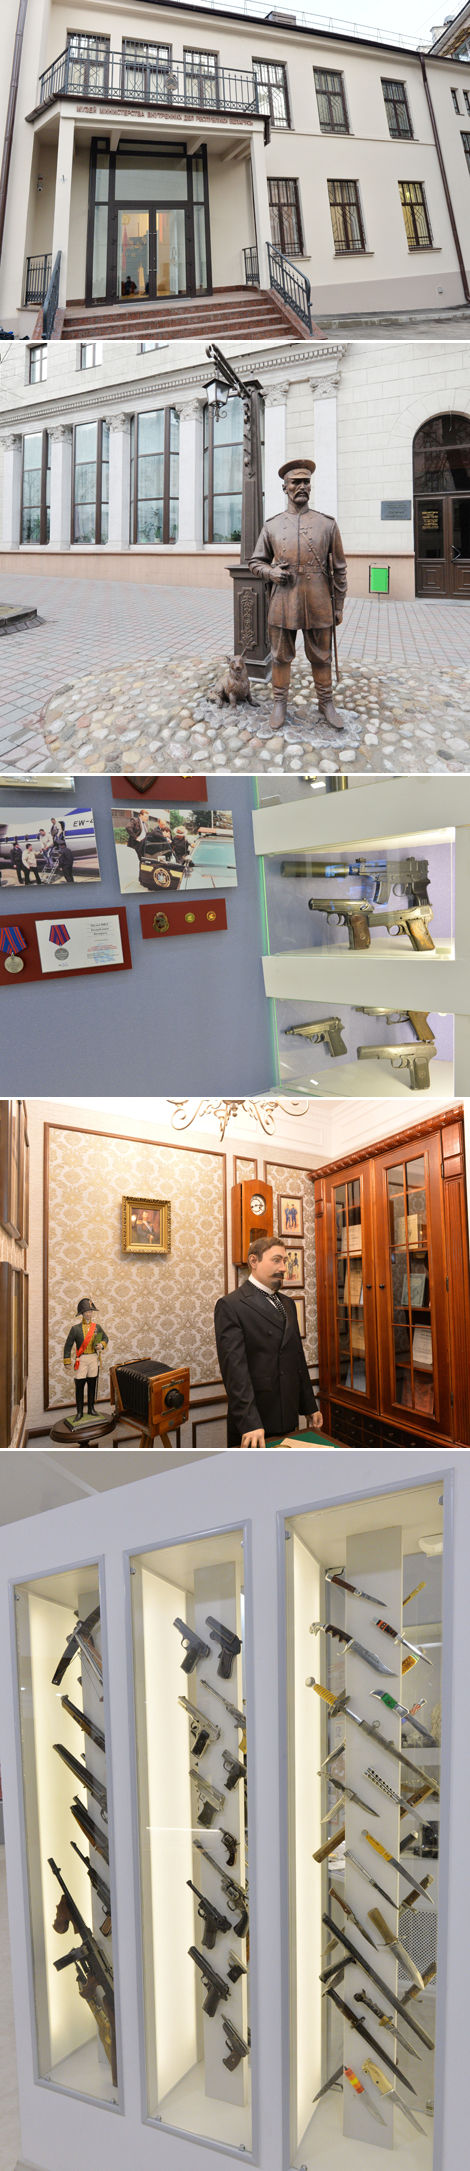 Interior Ministry Museum in Minsk